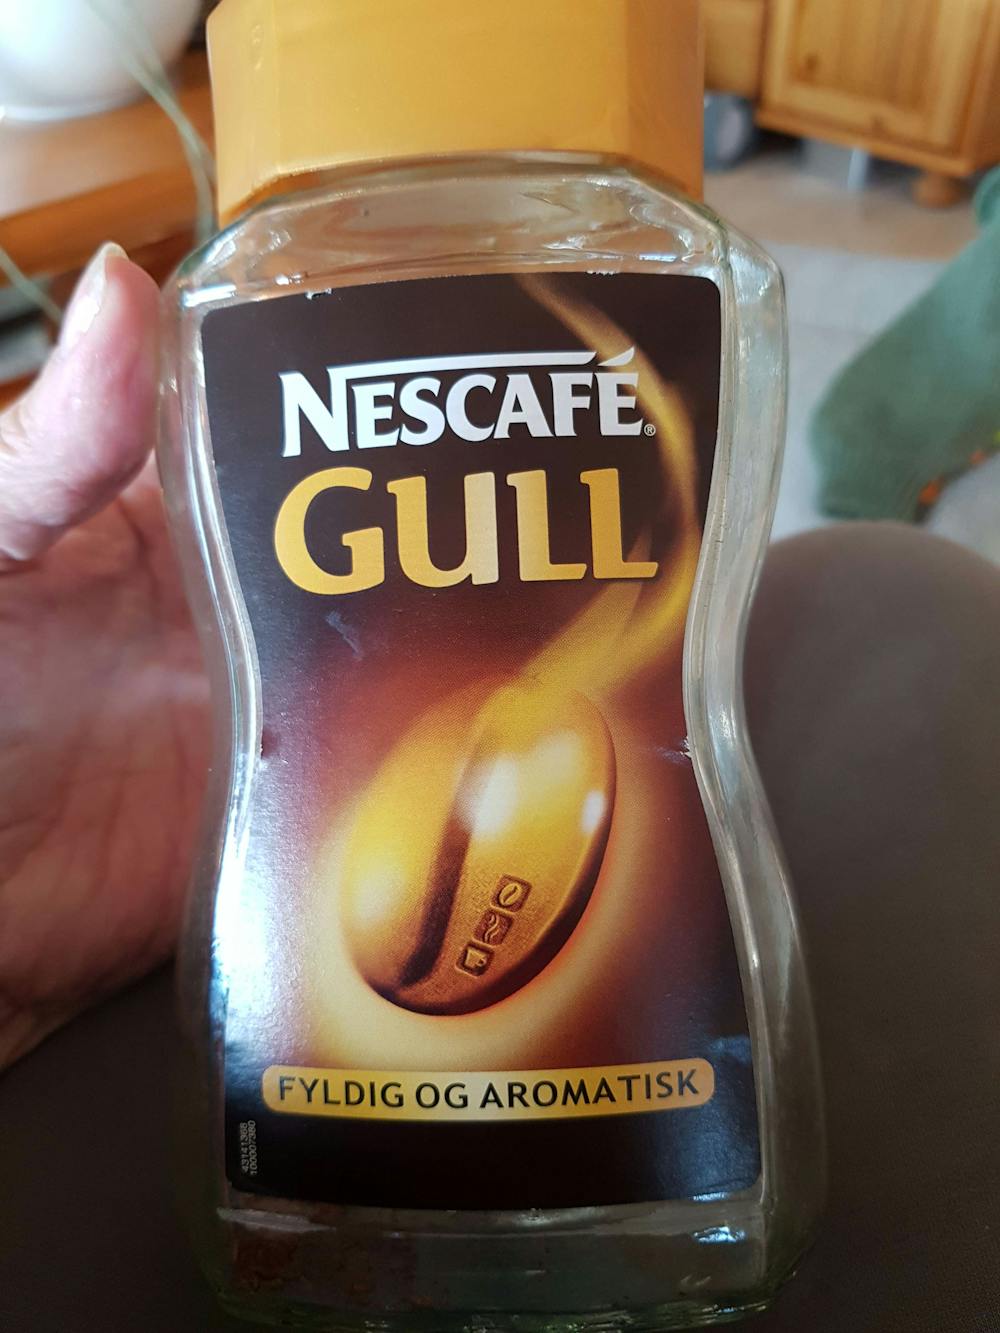 Neskaffe gull, Nescaffe